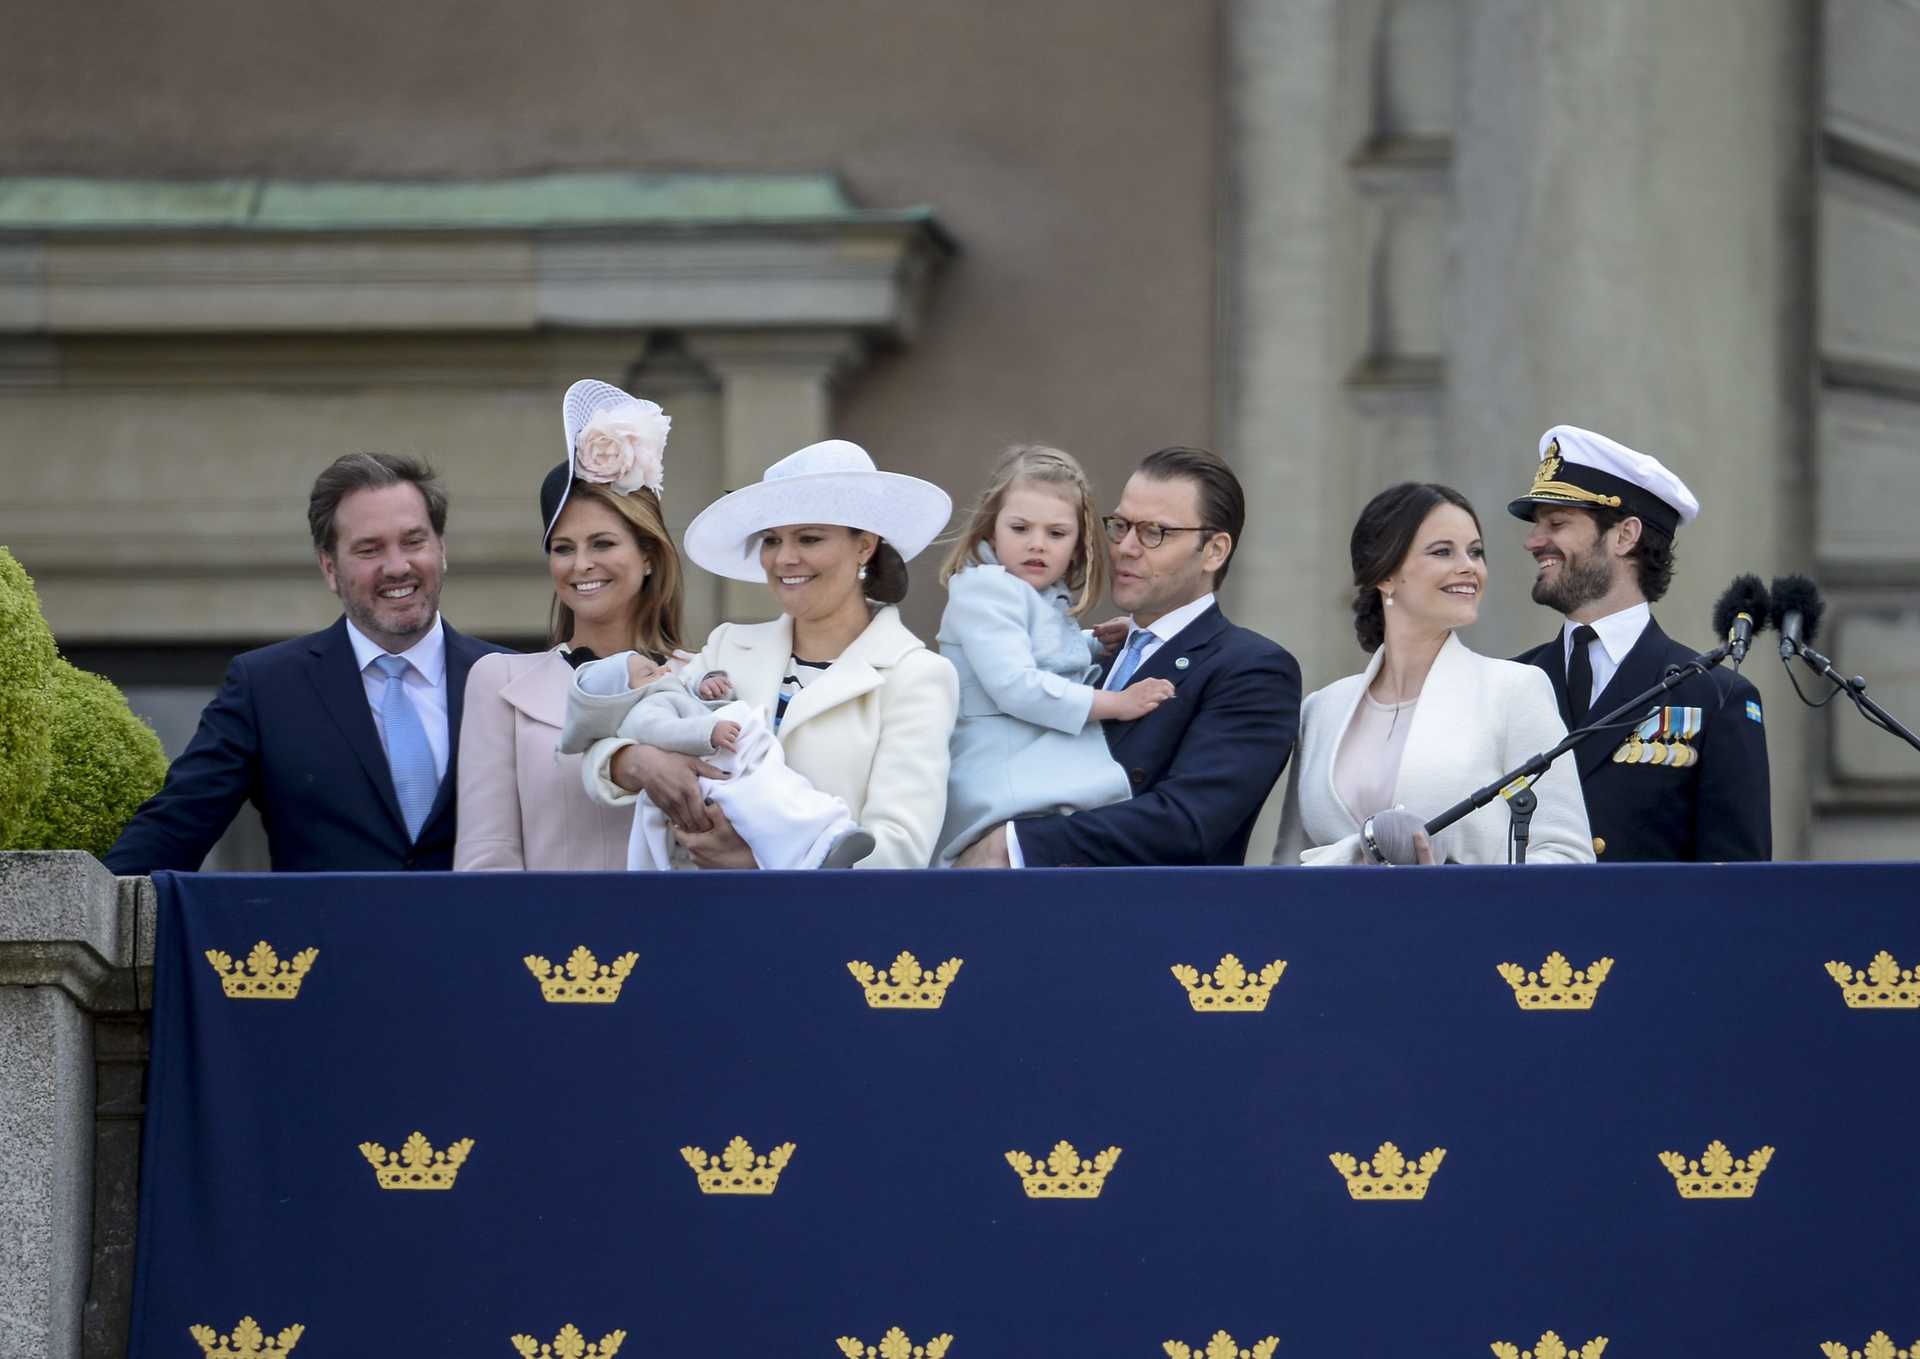 King Carl XVI Gustaf turns 70